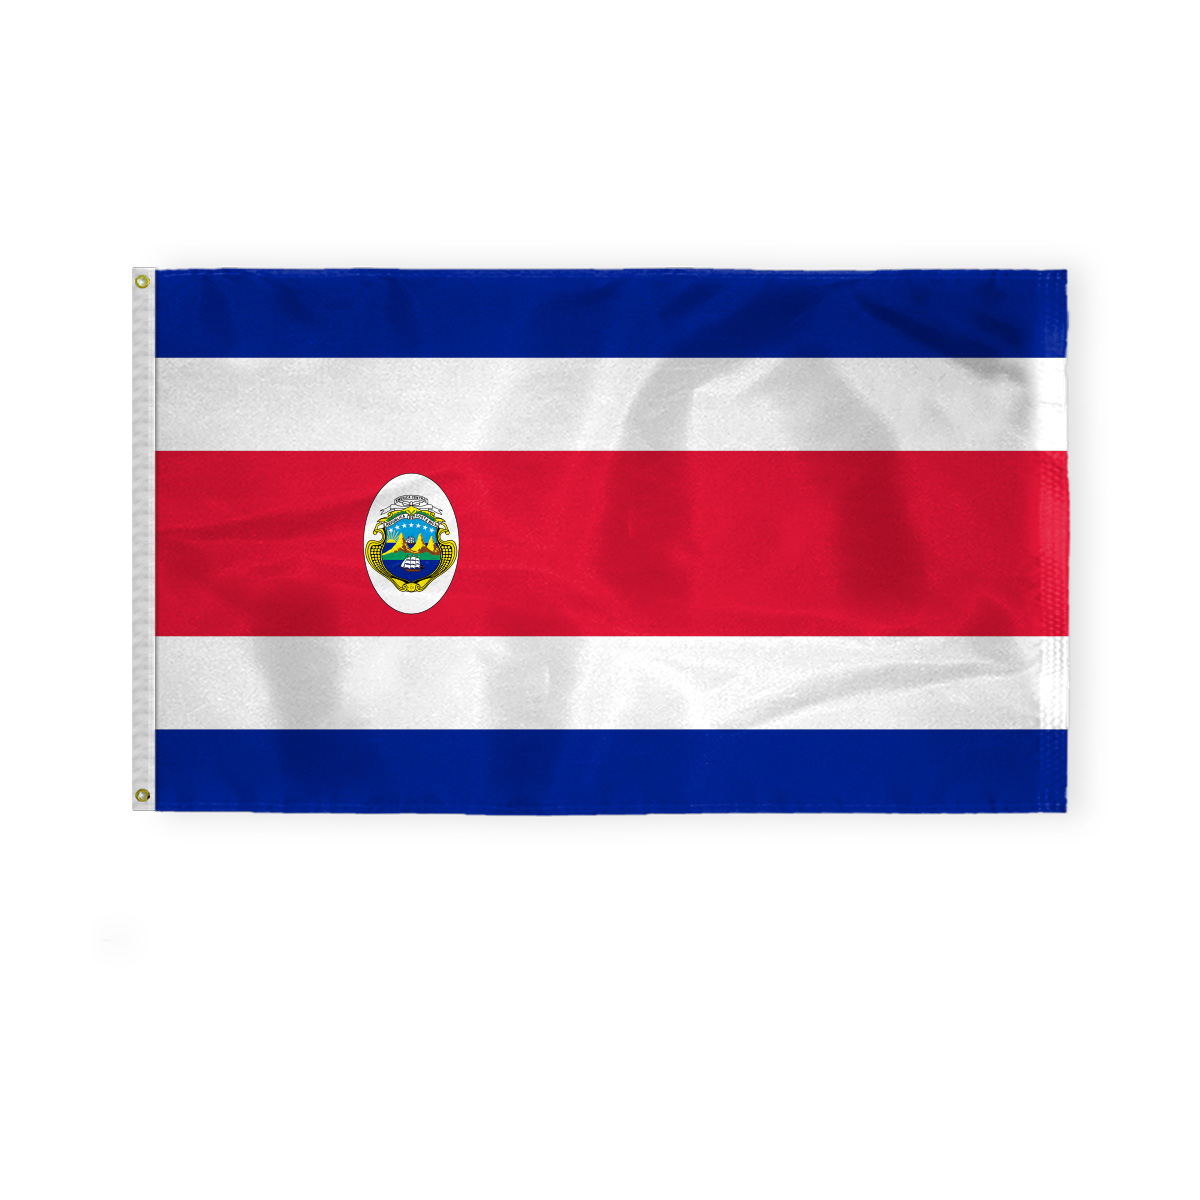 AGAS Costa Rica Costa Rican Flag 3x5 ft 200D Nylon